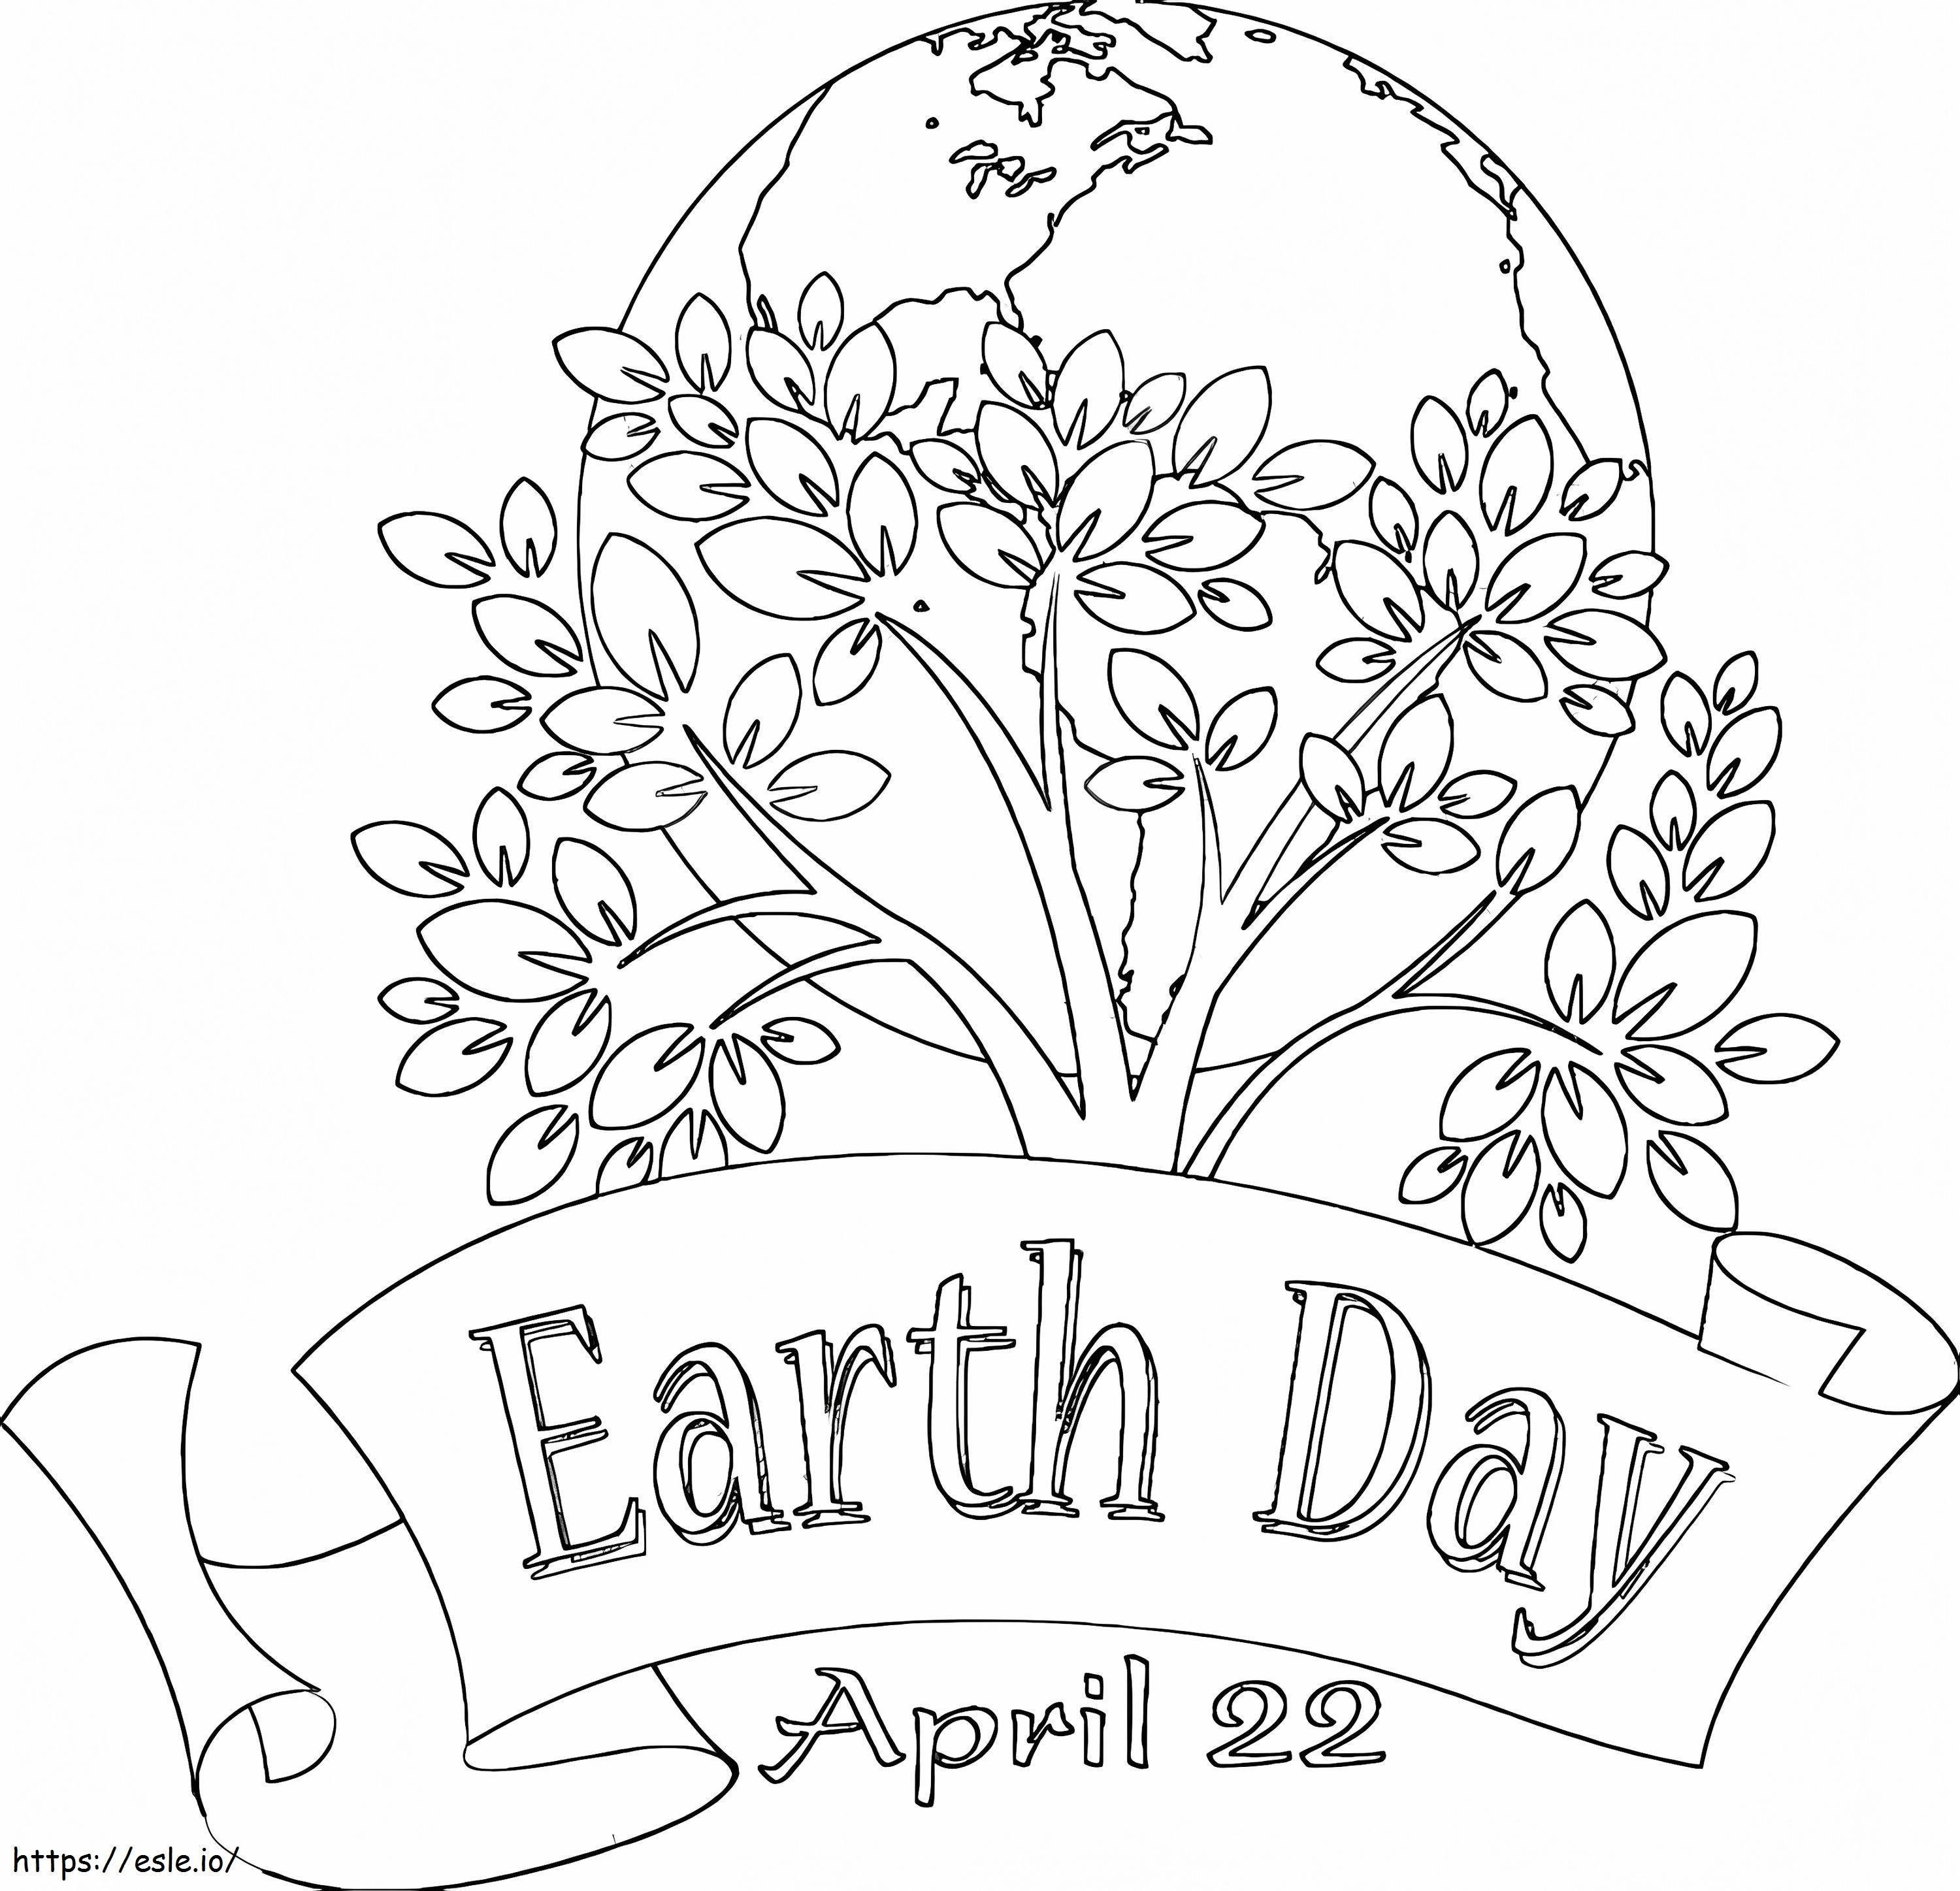 22. April Tag der Erde ausmalbilder